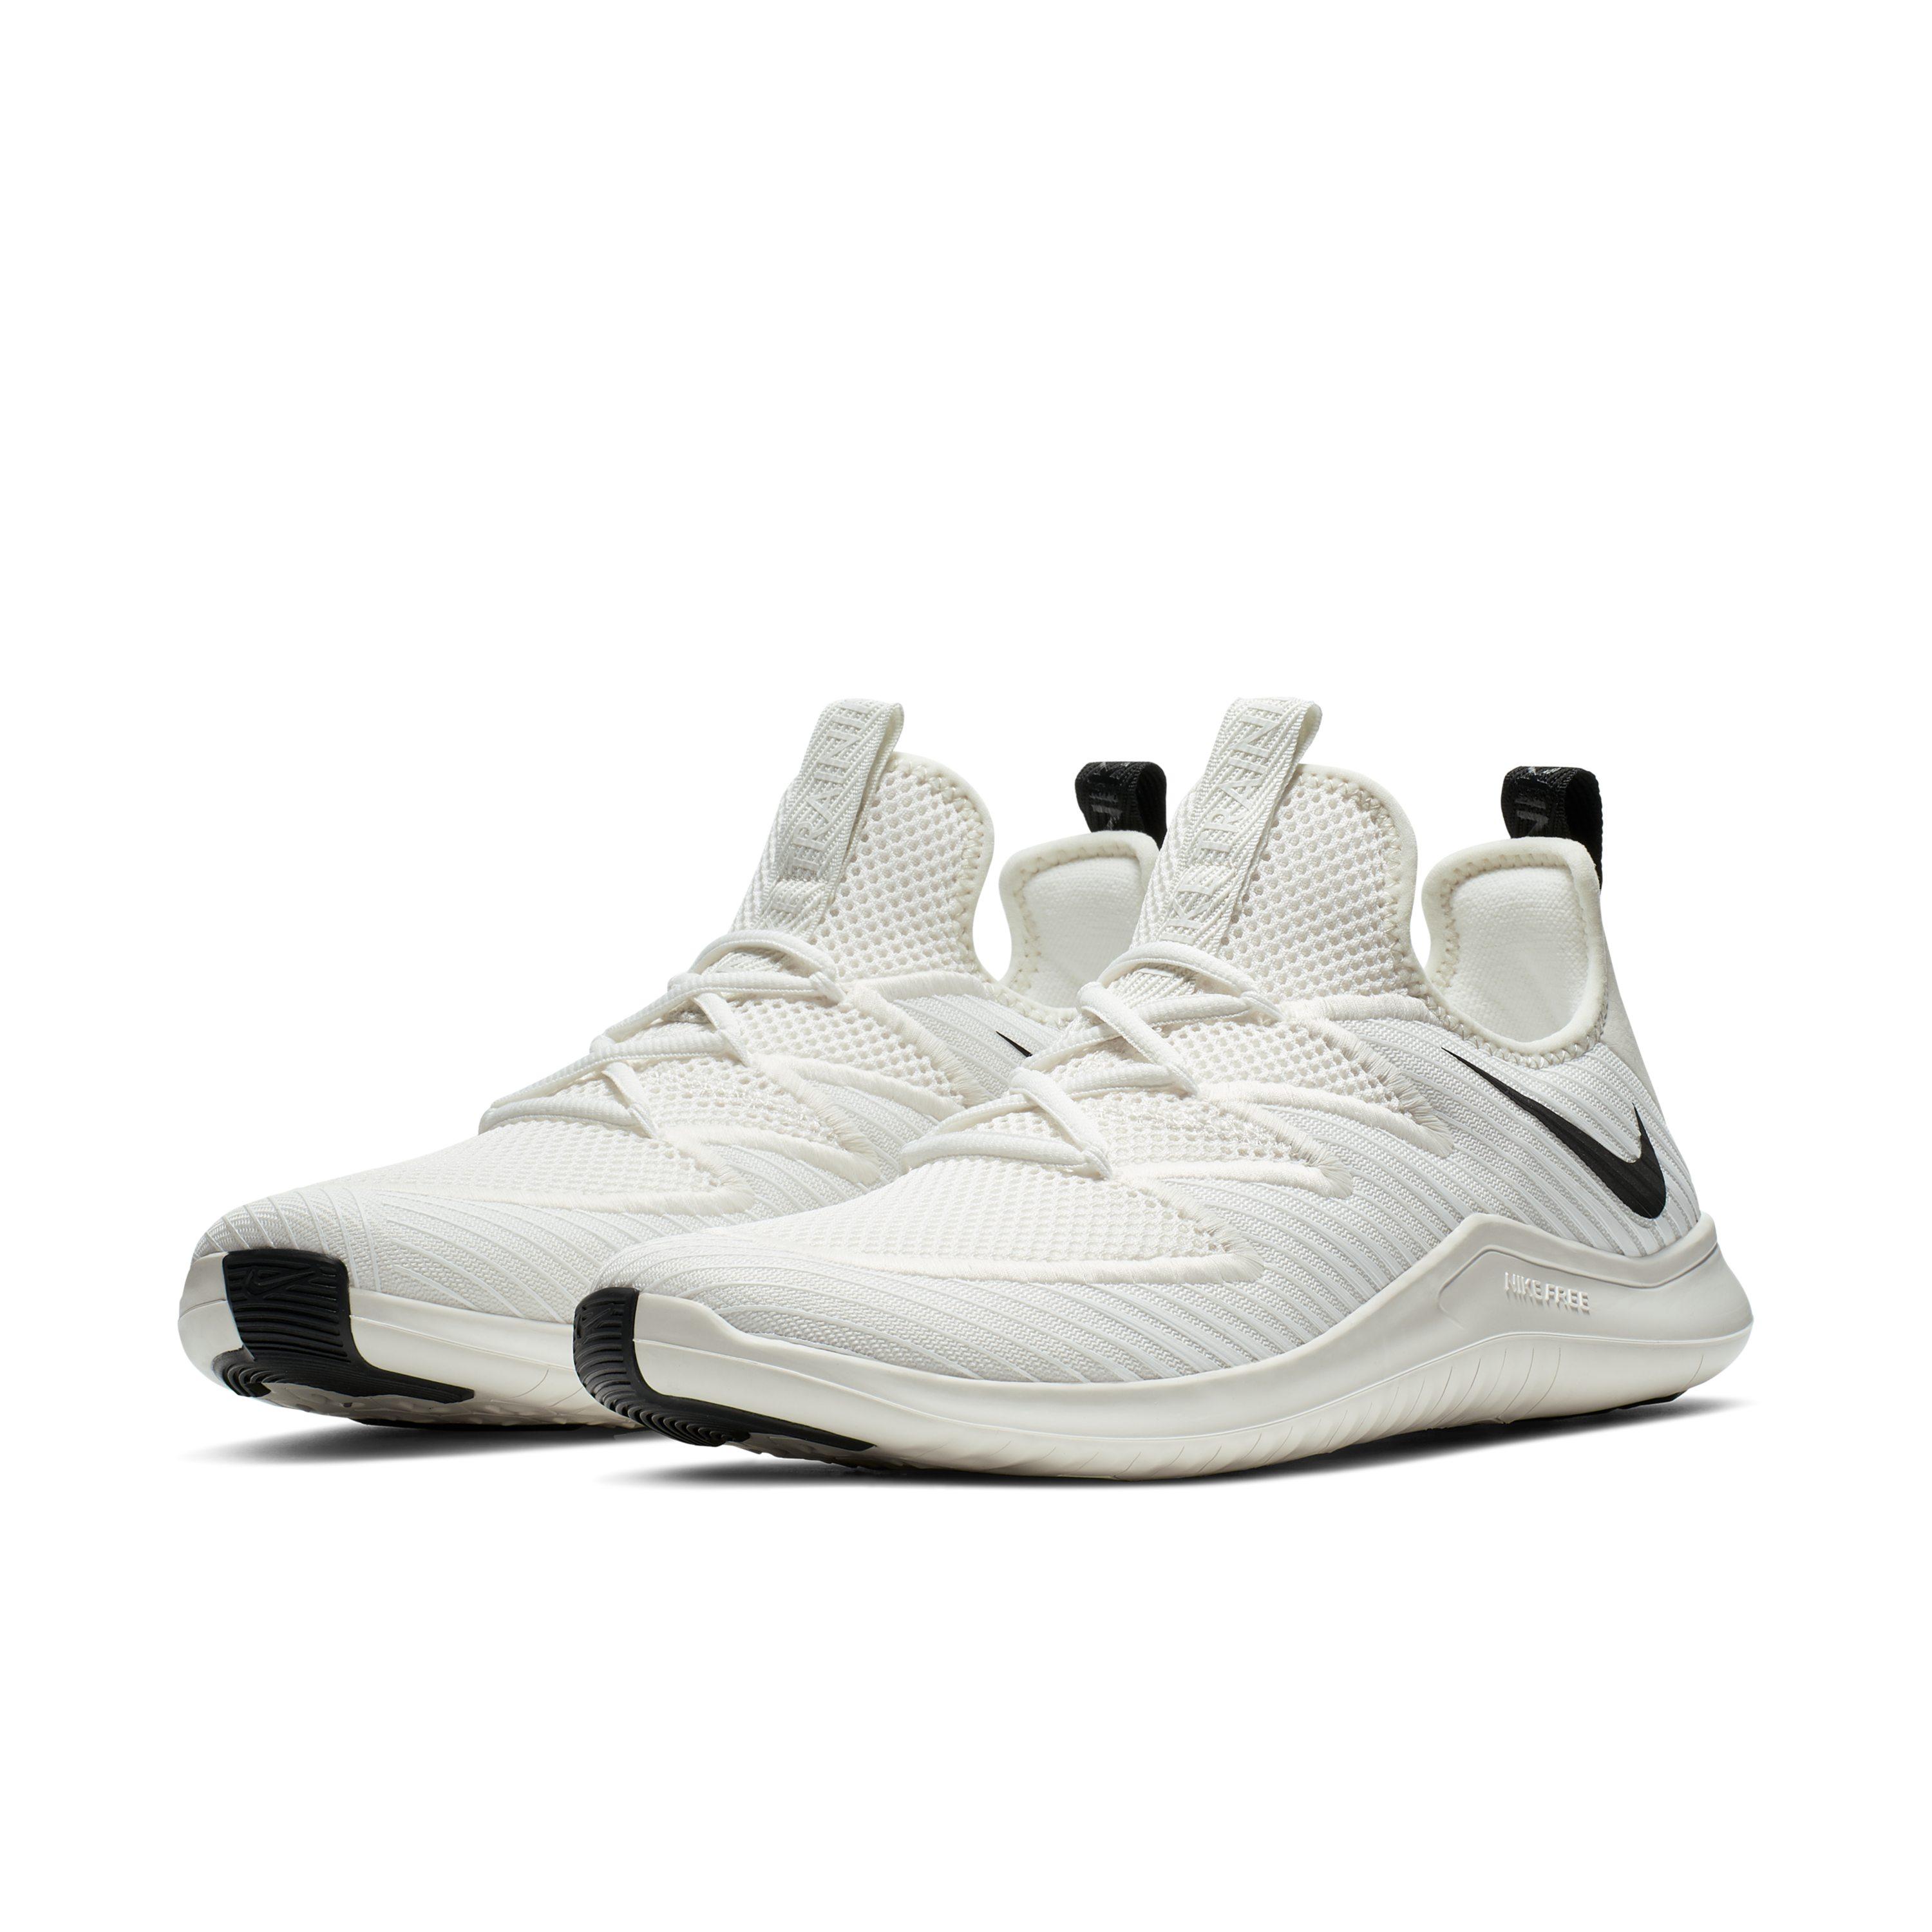 Nike Free Tr 9 Ultra Training Shoe in Cream (White) for Men - Lyst